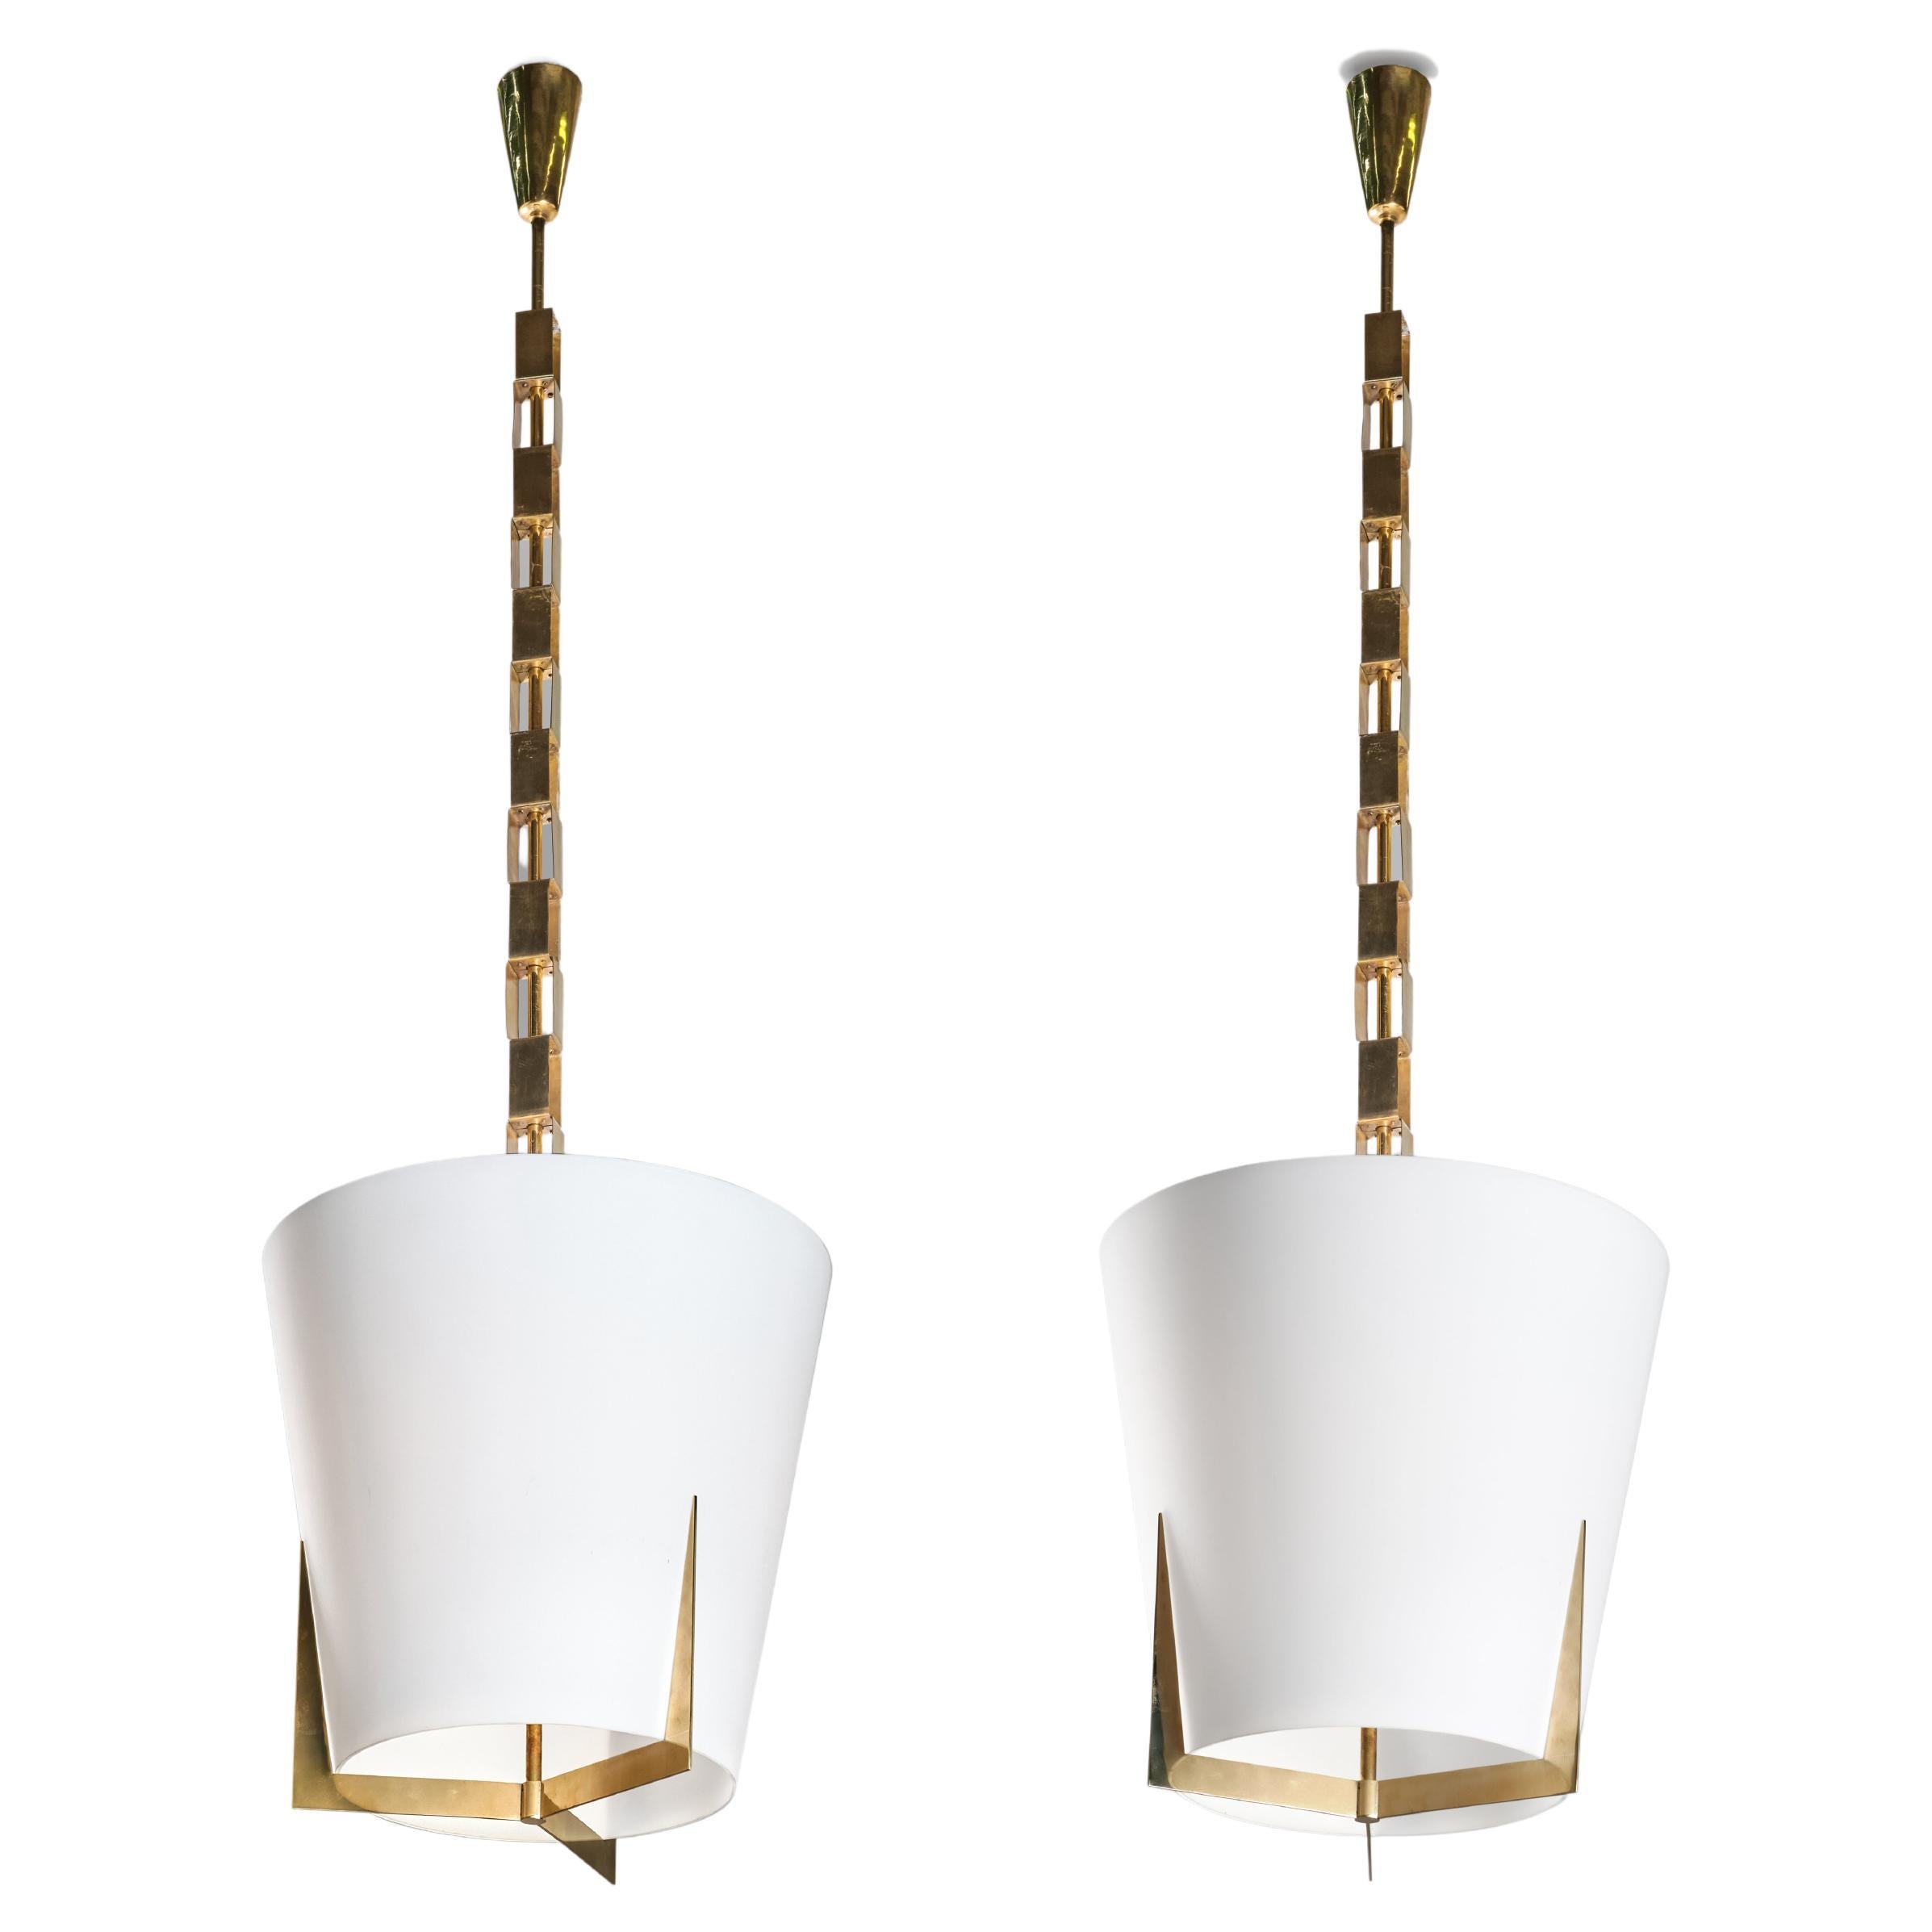 Fontana Arte pair of brass and glass chandeliers, Italian Design 1960 circa